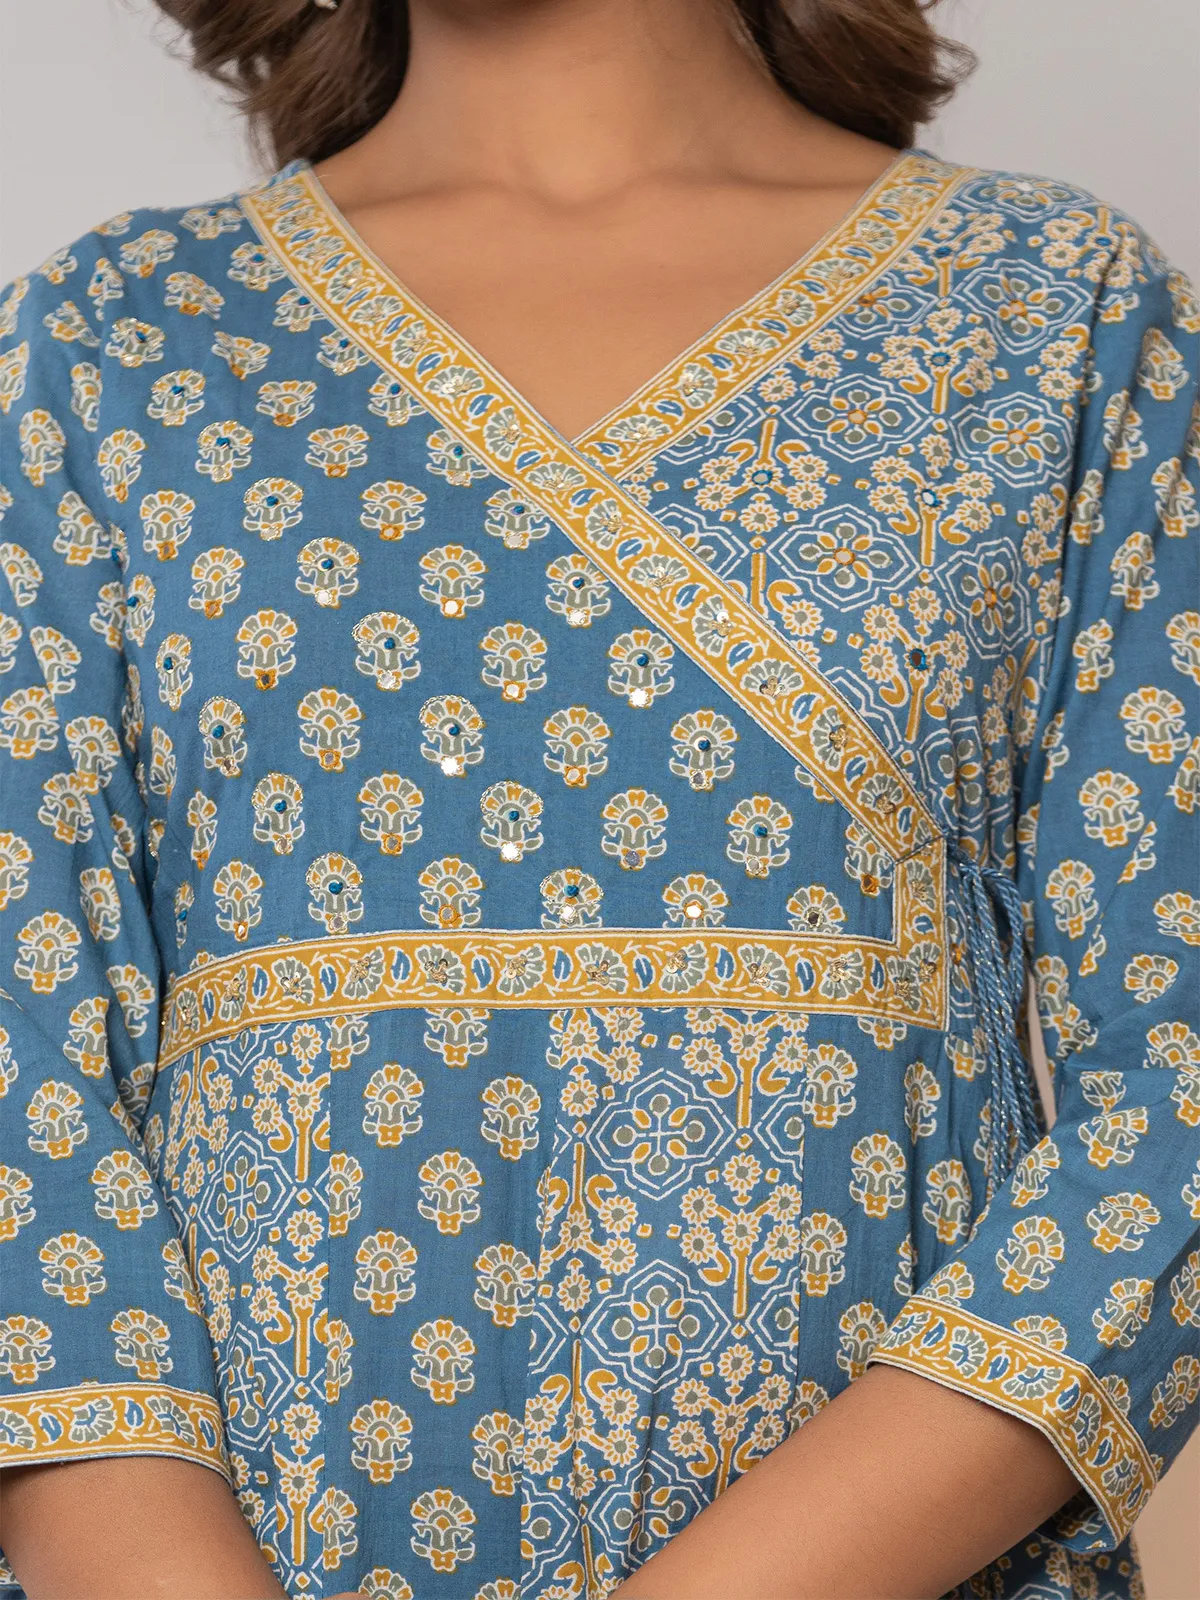 Trendy blue cotton printed kurti set